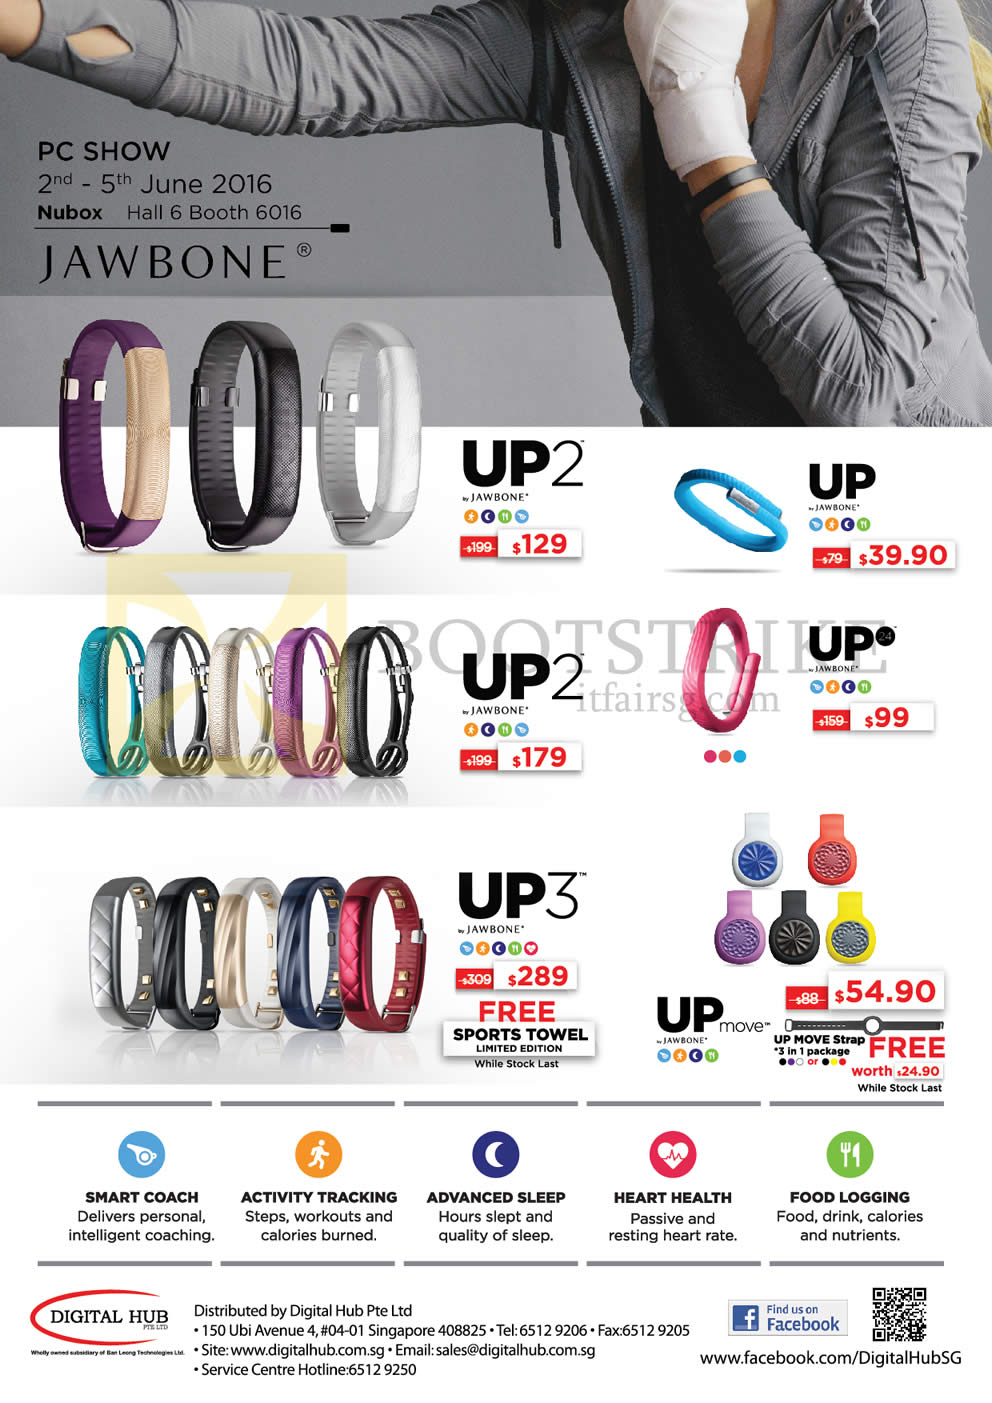 PC SHOW 2016 price list image brochure of Nubox Jawbone Nubox UP2, UP, UP3, UP Move